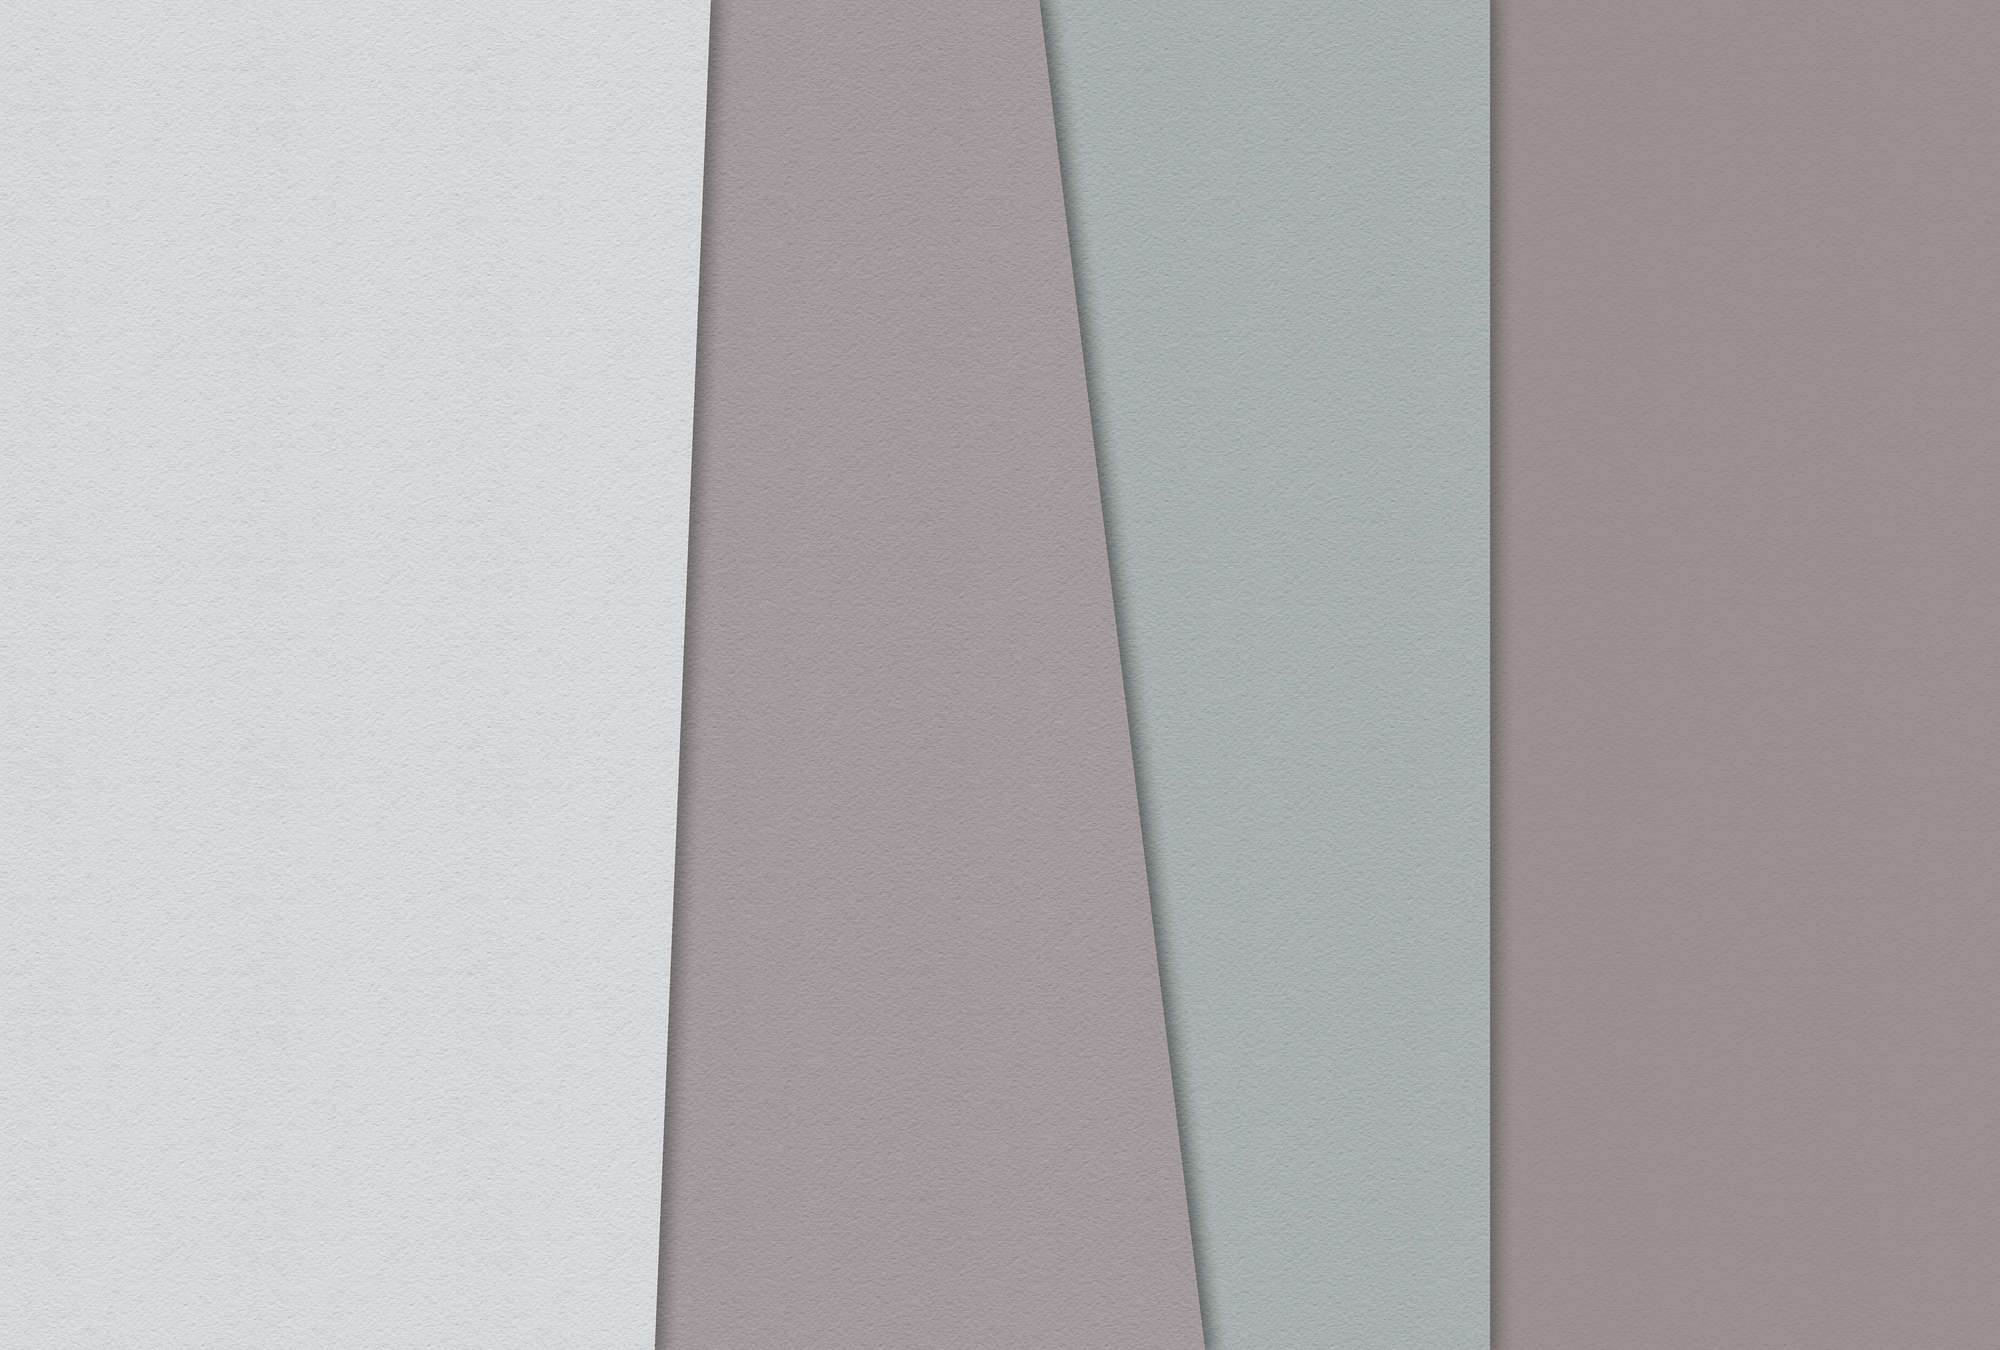             Layered paper 3 - Minimalist Wallpaper Colour Fields Handmade Paper Texture - Blue, Cream | Premium Smooth Non-woven
        